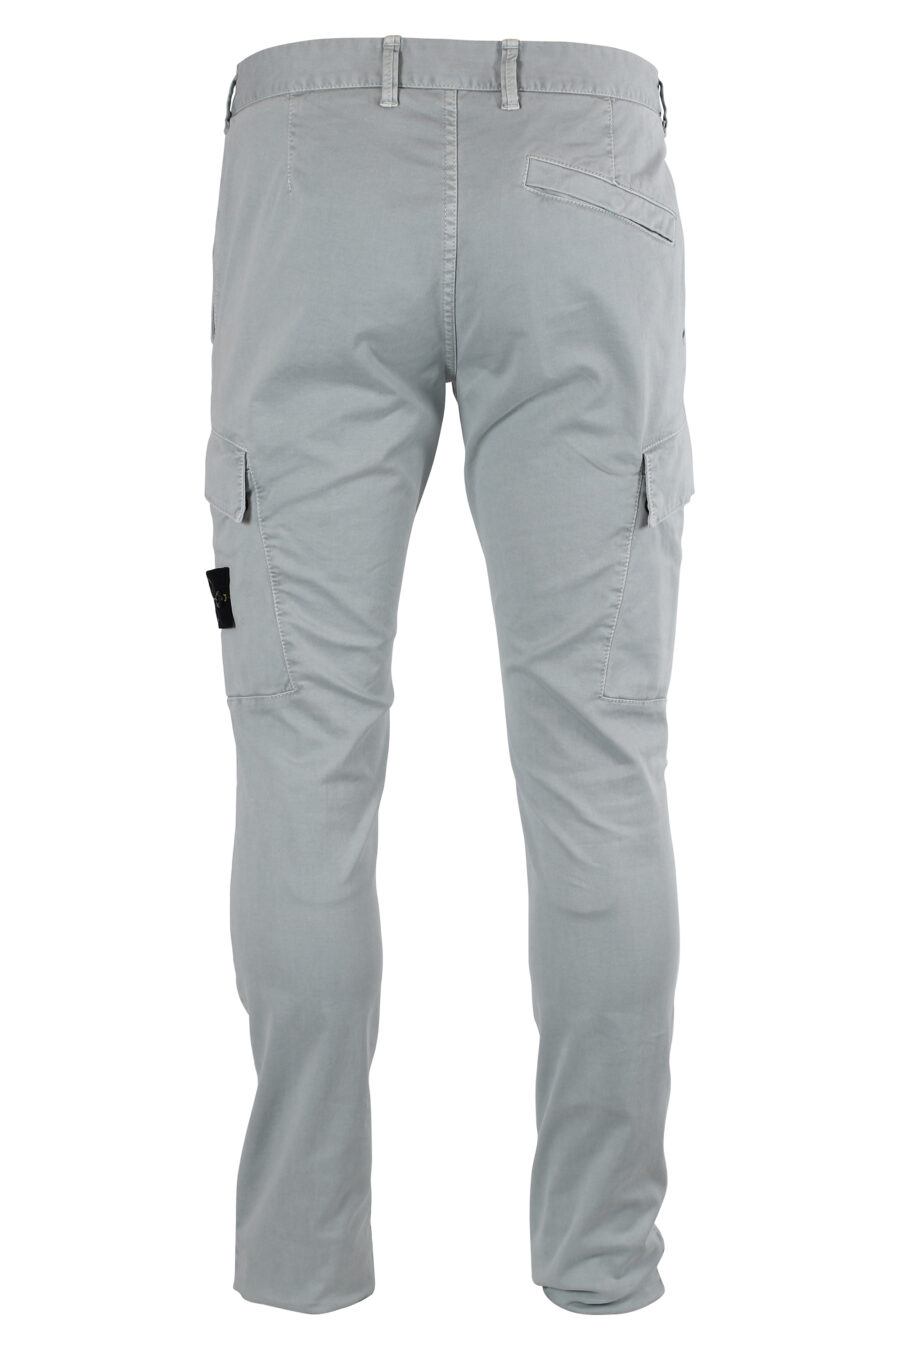 Pantalón gris claro con bolsillos y parche lateral - IMG 8336